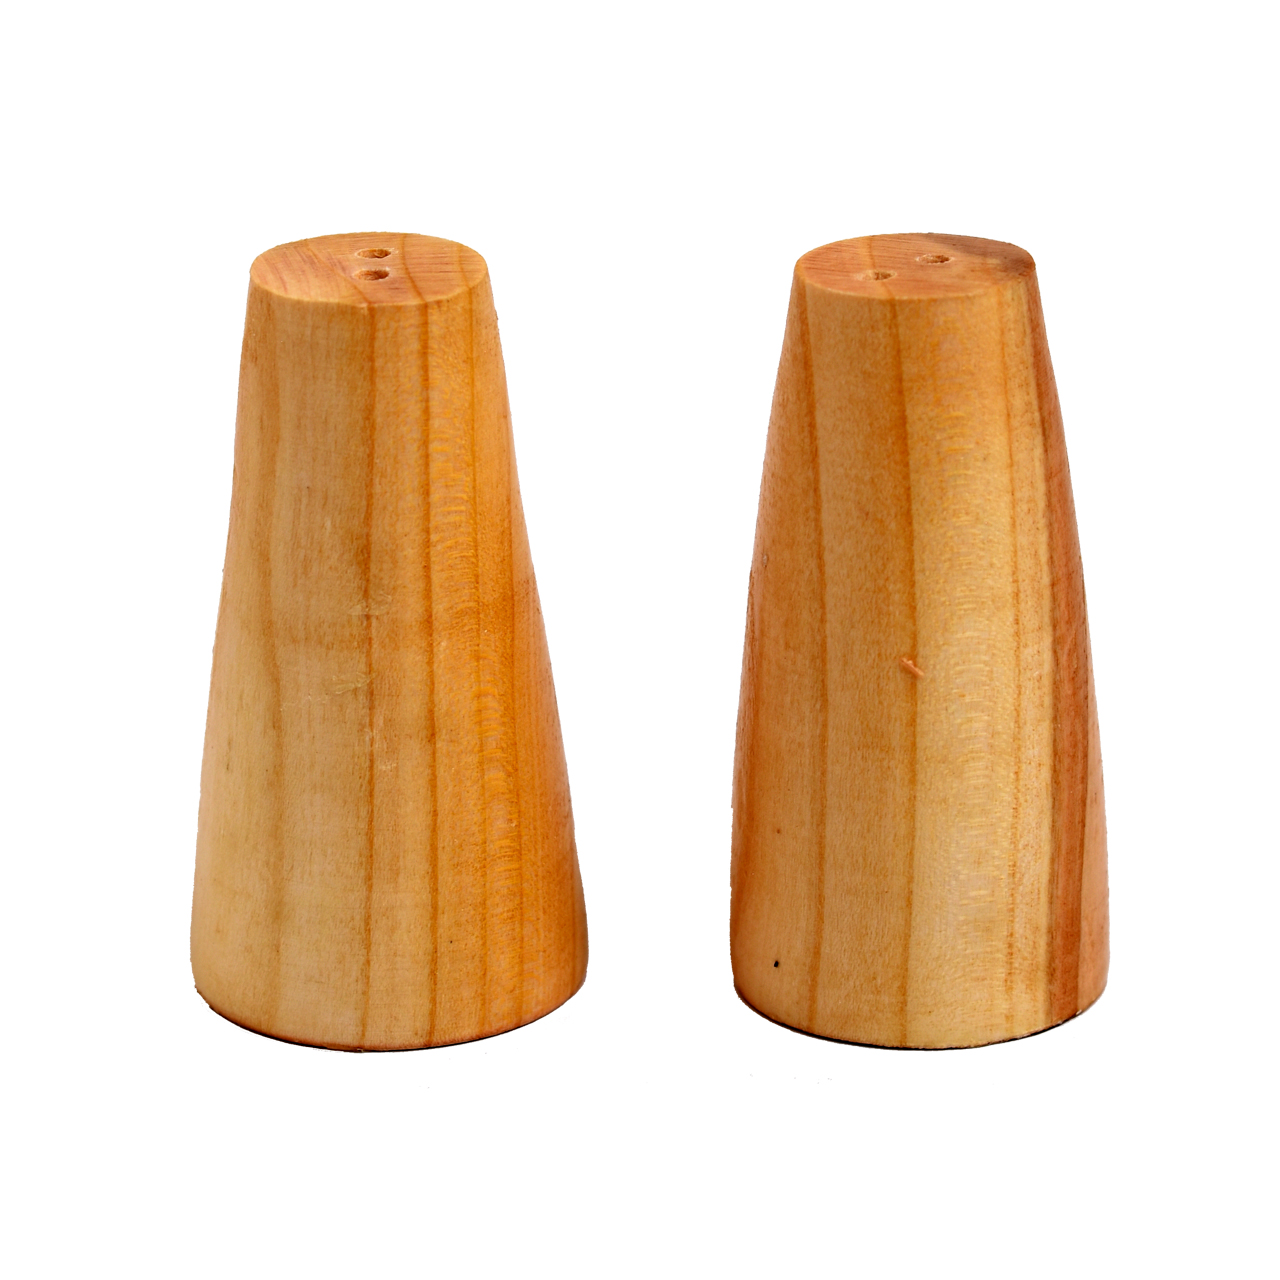 نمکدان چوبی مدل GHI مجموعه 2 عددی